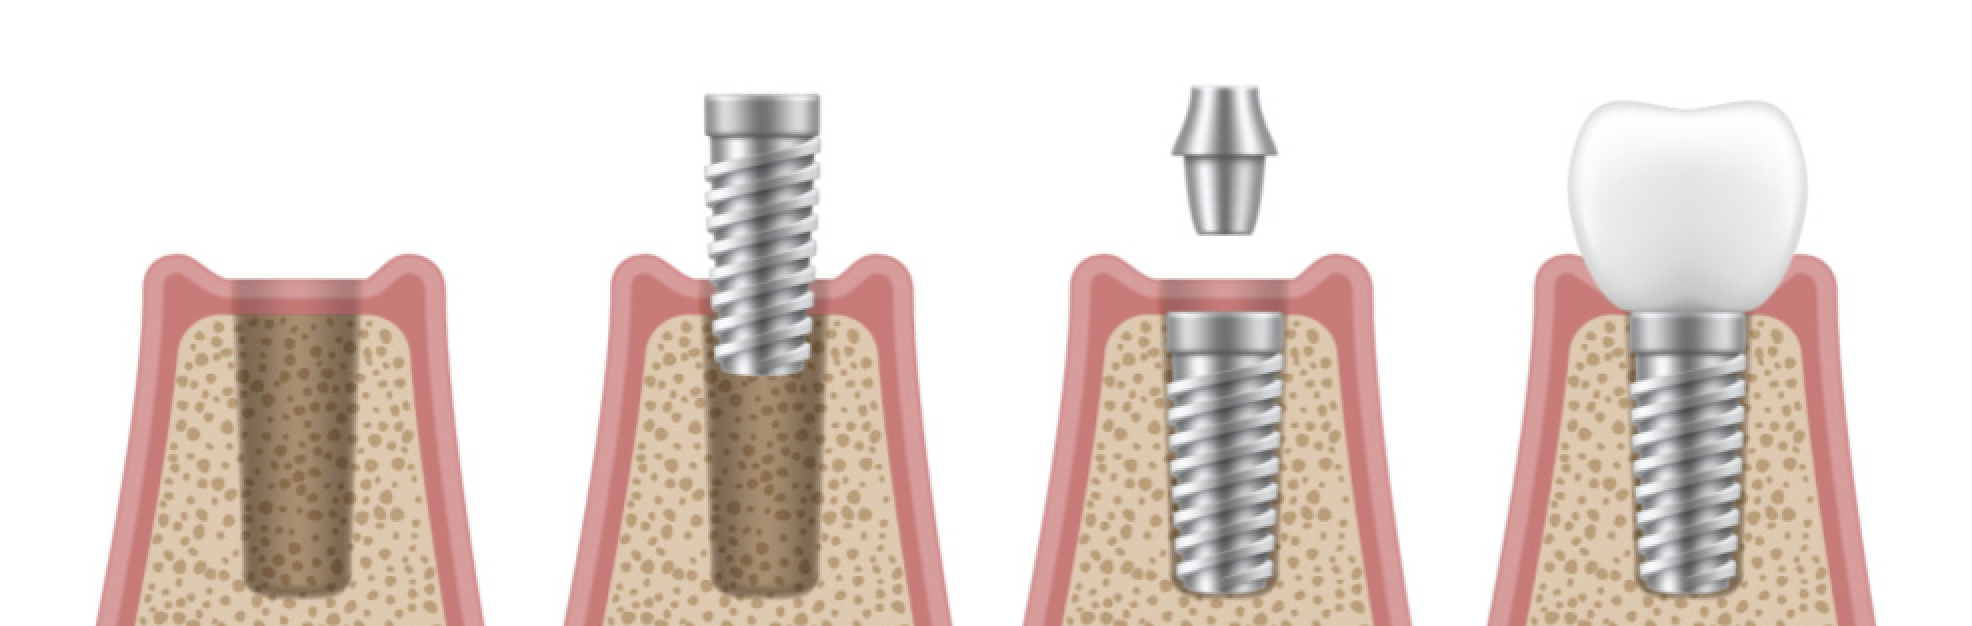 dental implants Beverly hills ca